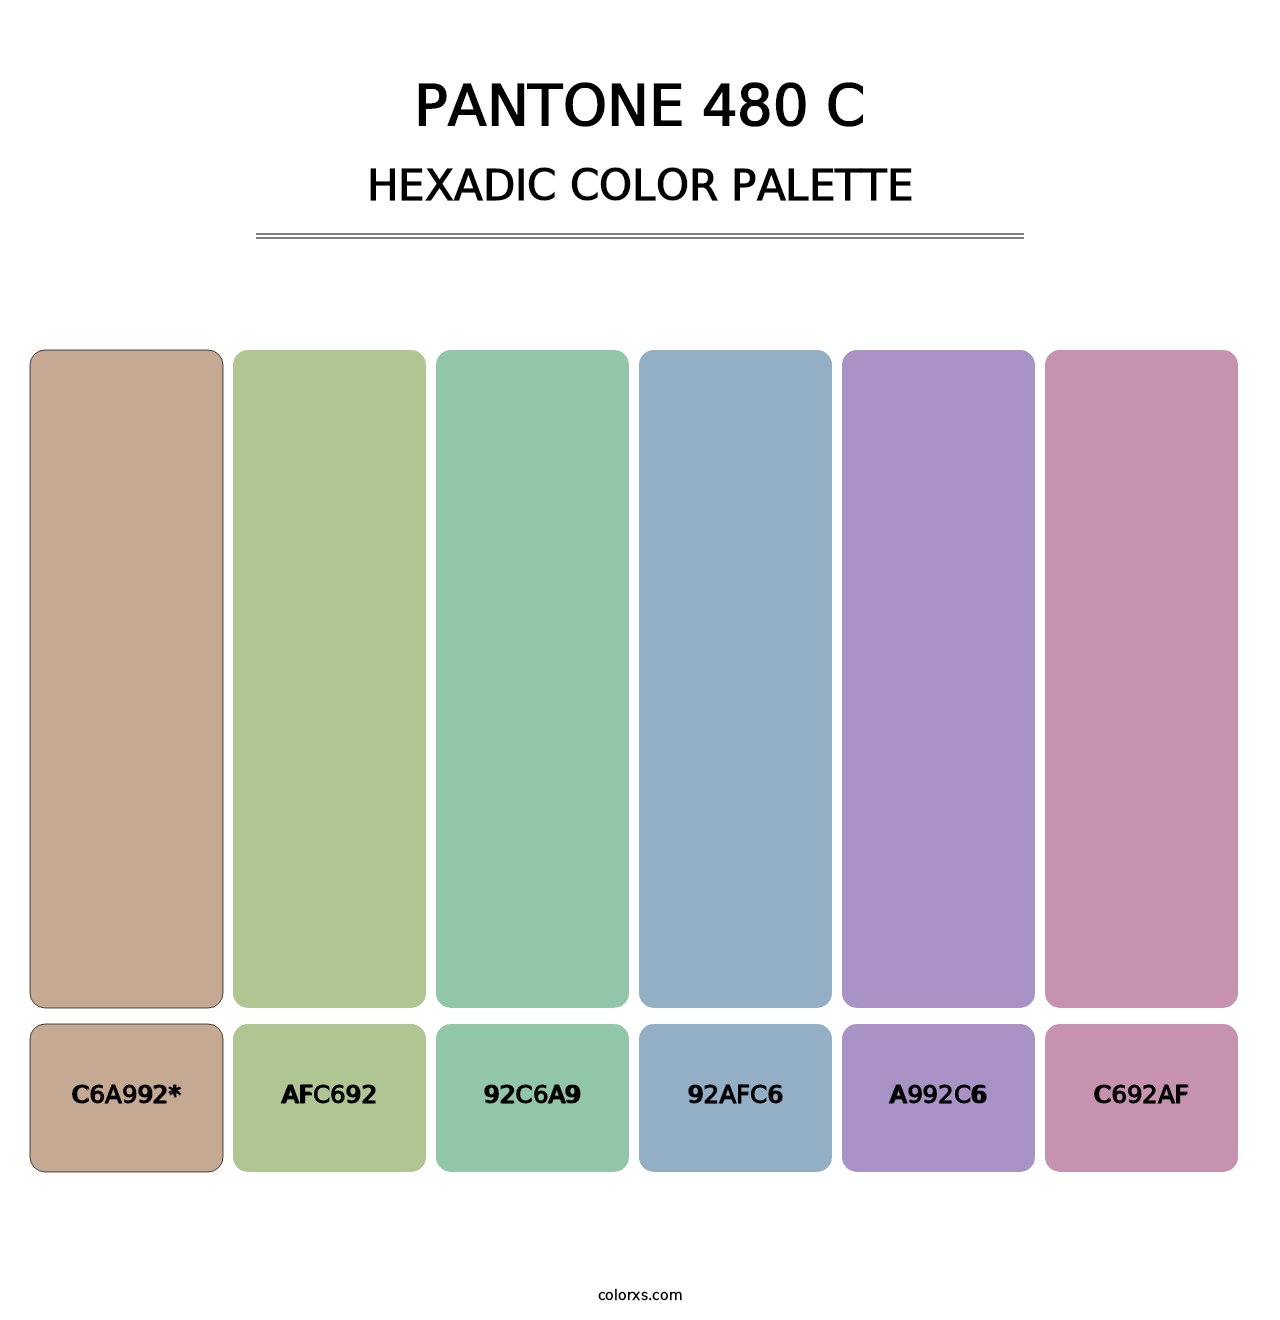 PANTONE 480 C - Hexadic Color Palette